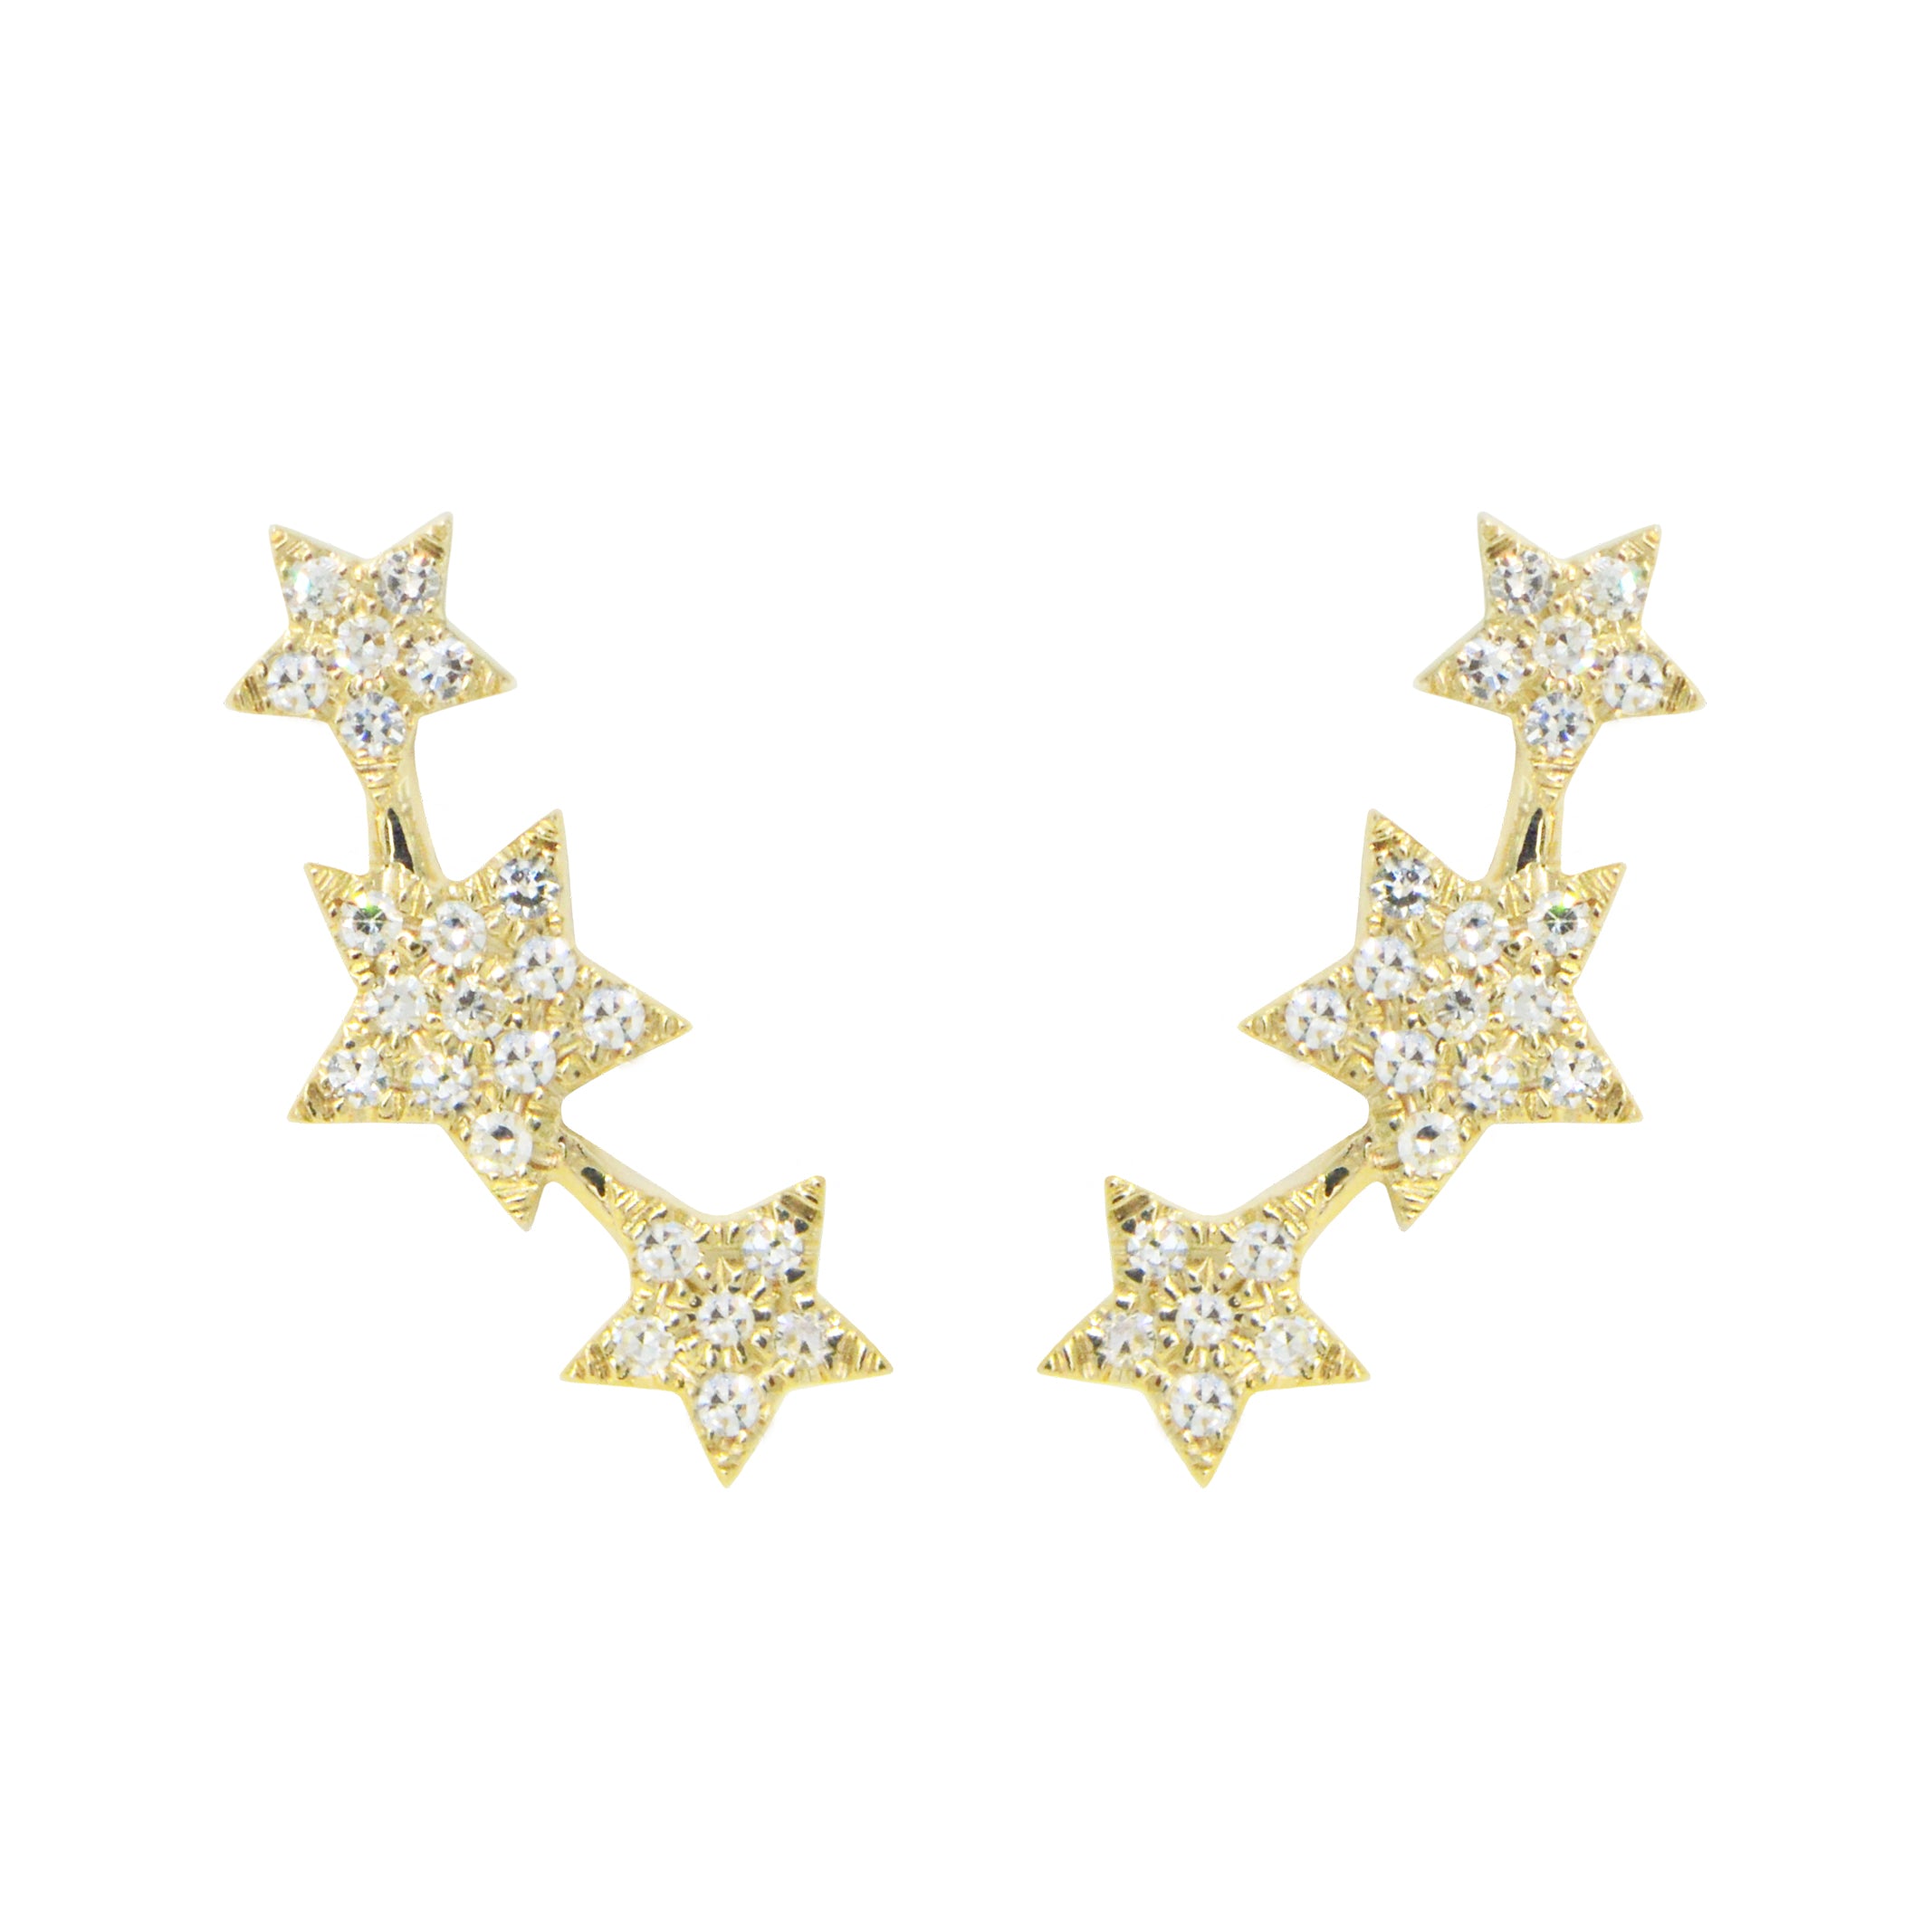 The Tri-Cluster Diamond Studs – Après Jewelry